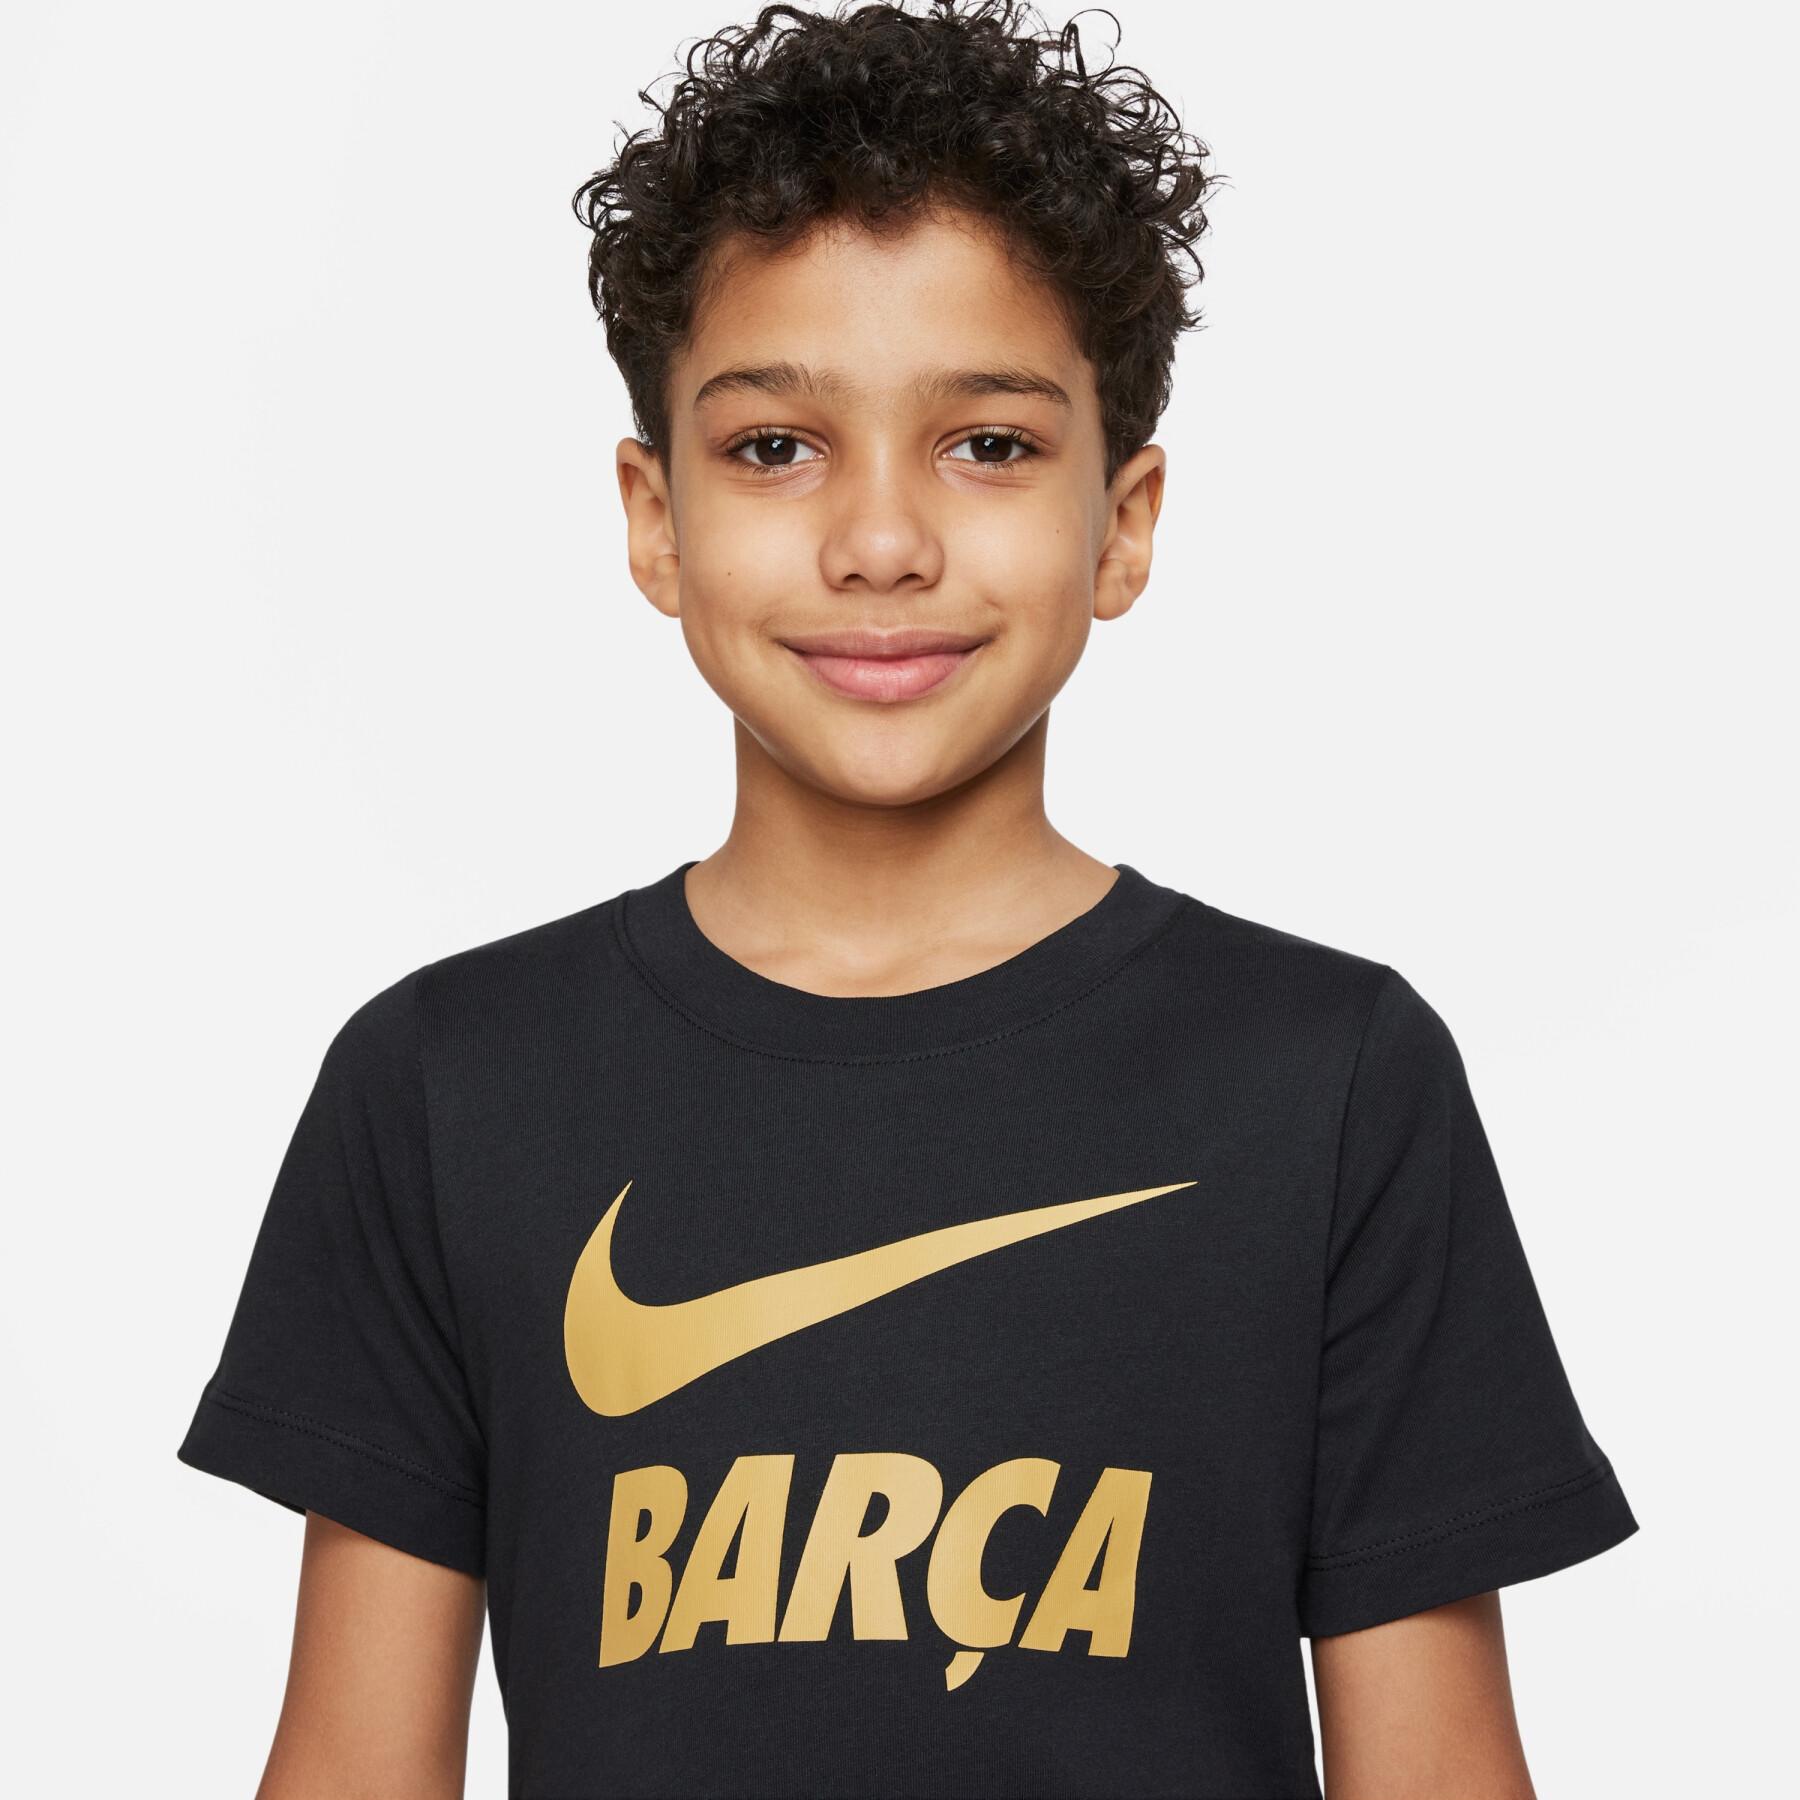 T-shirt child barcelona 2020/21